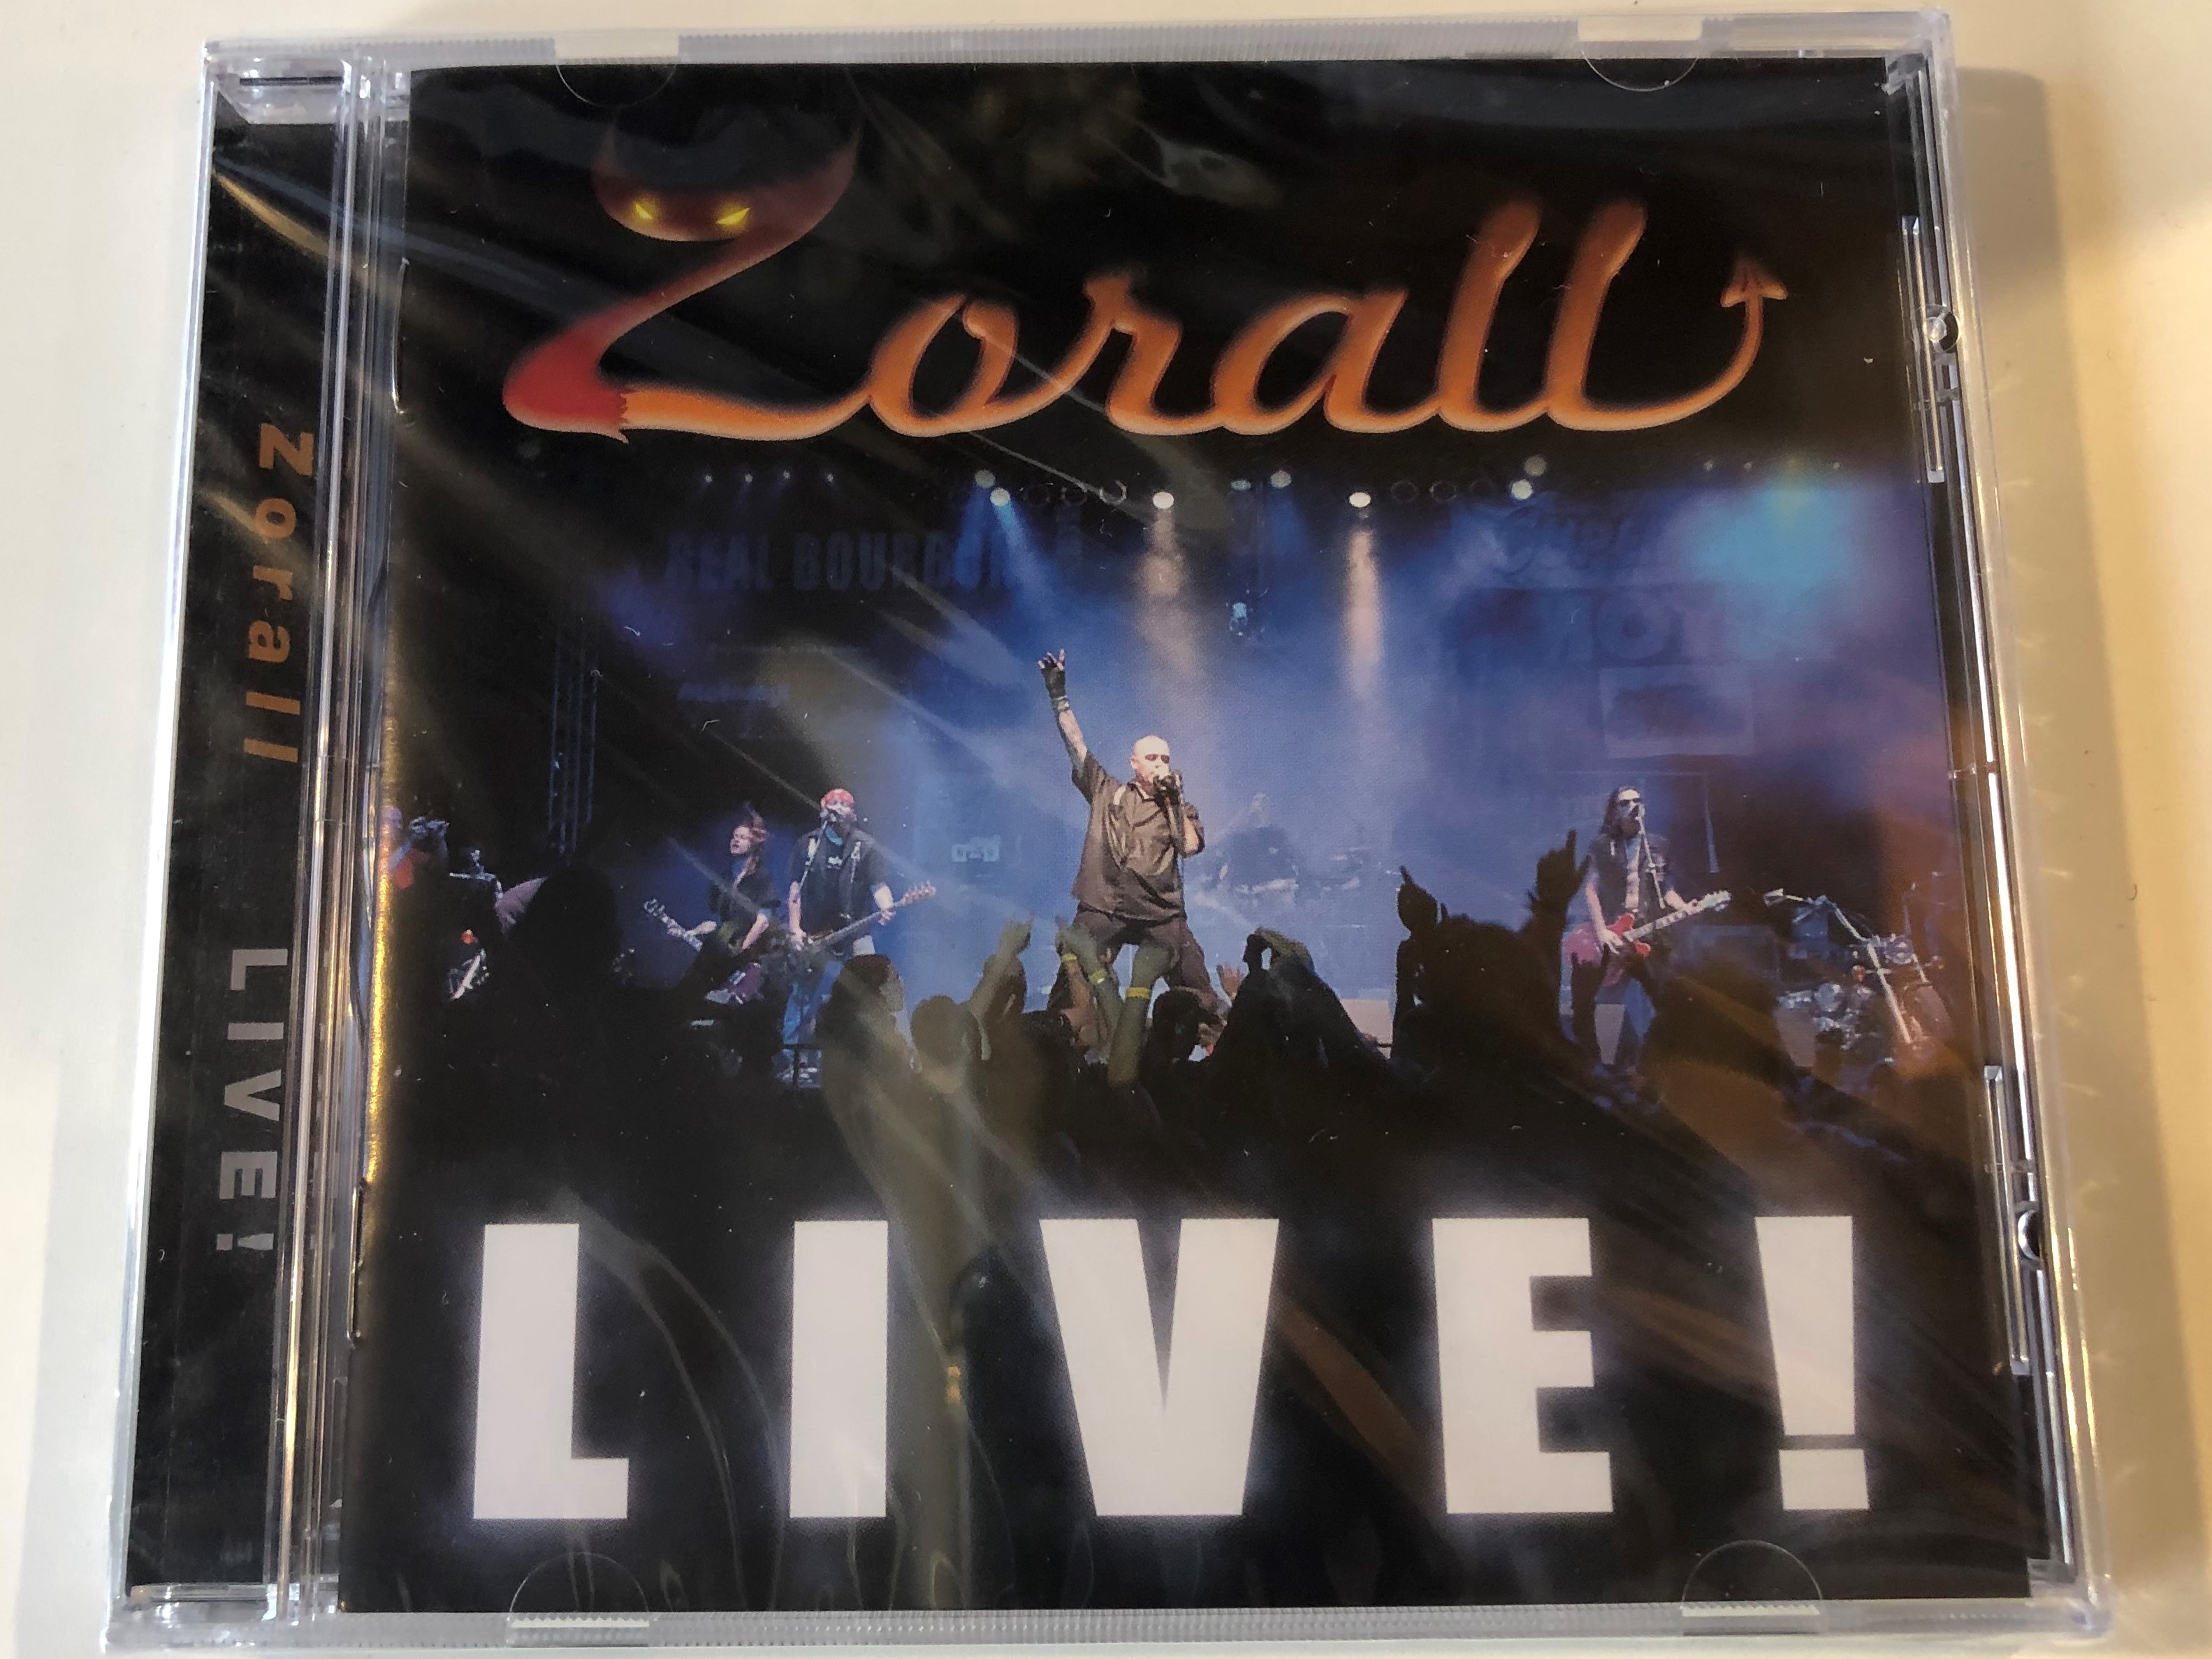 zorall-live-ff-film-music-audio-cd-5999545561716-1-.jpg